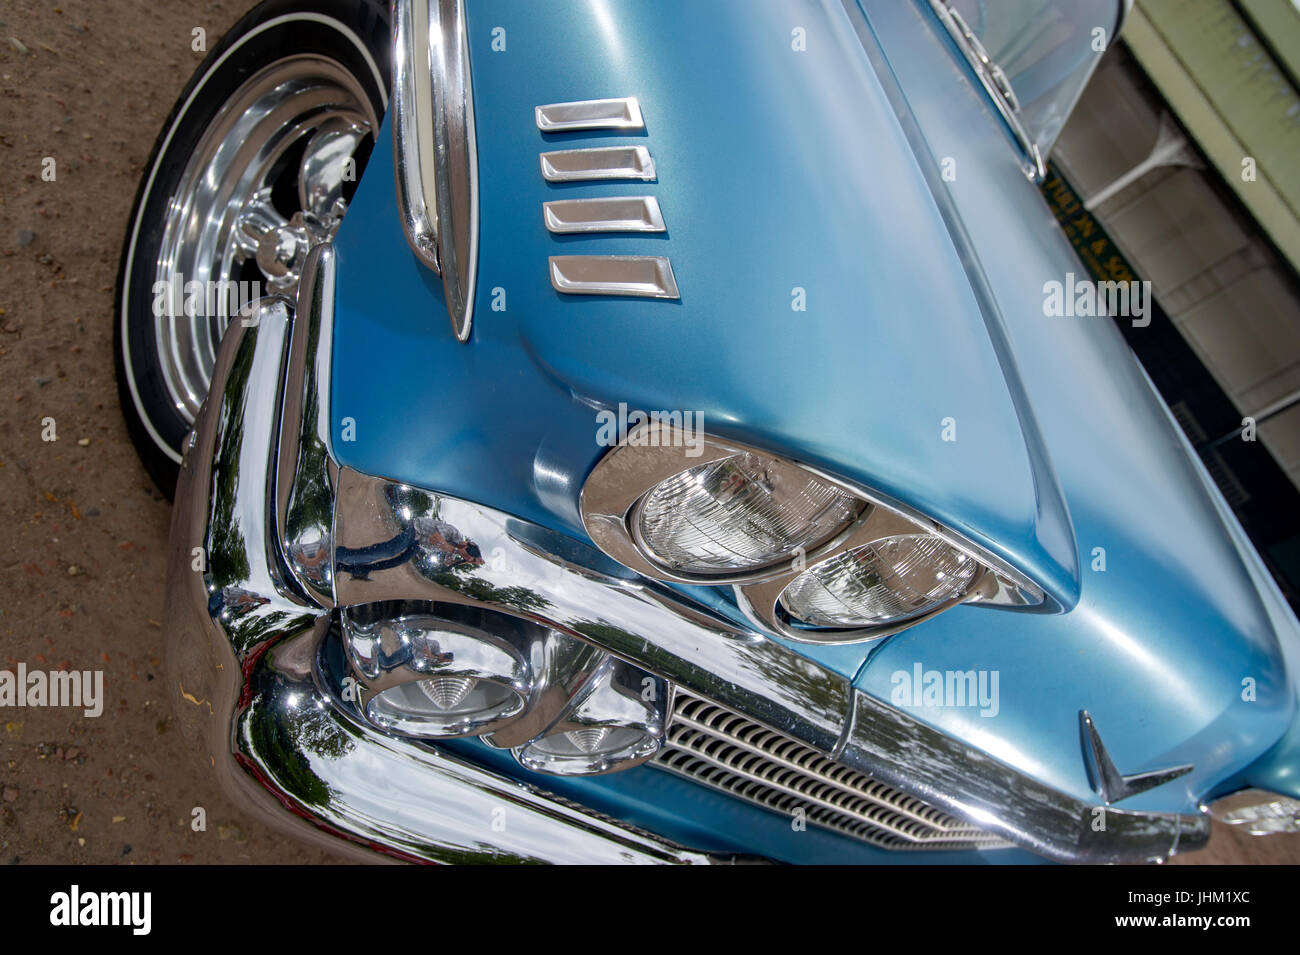 1958 Chevrolet Brookwood station wagon classic American car Stock Photo